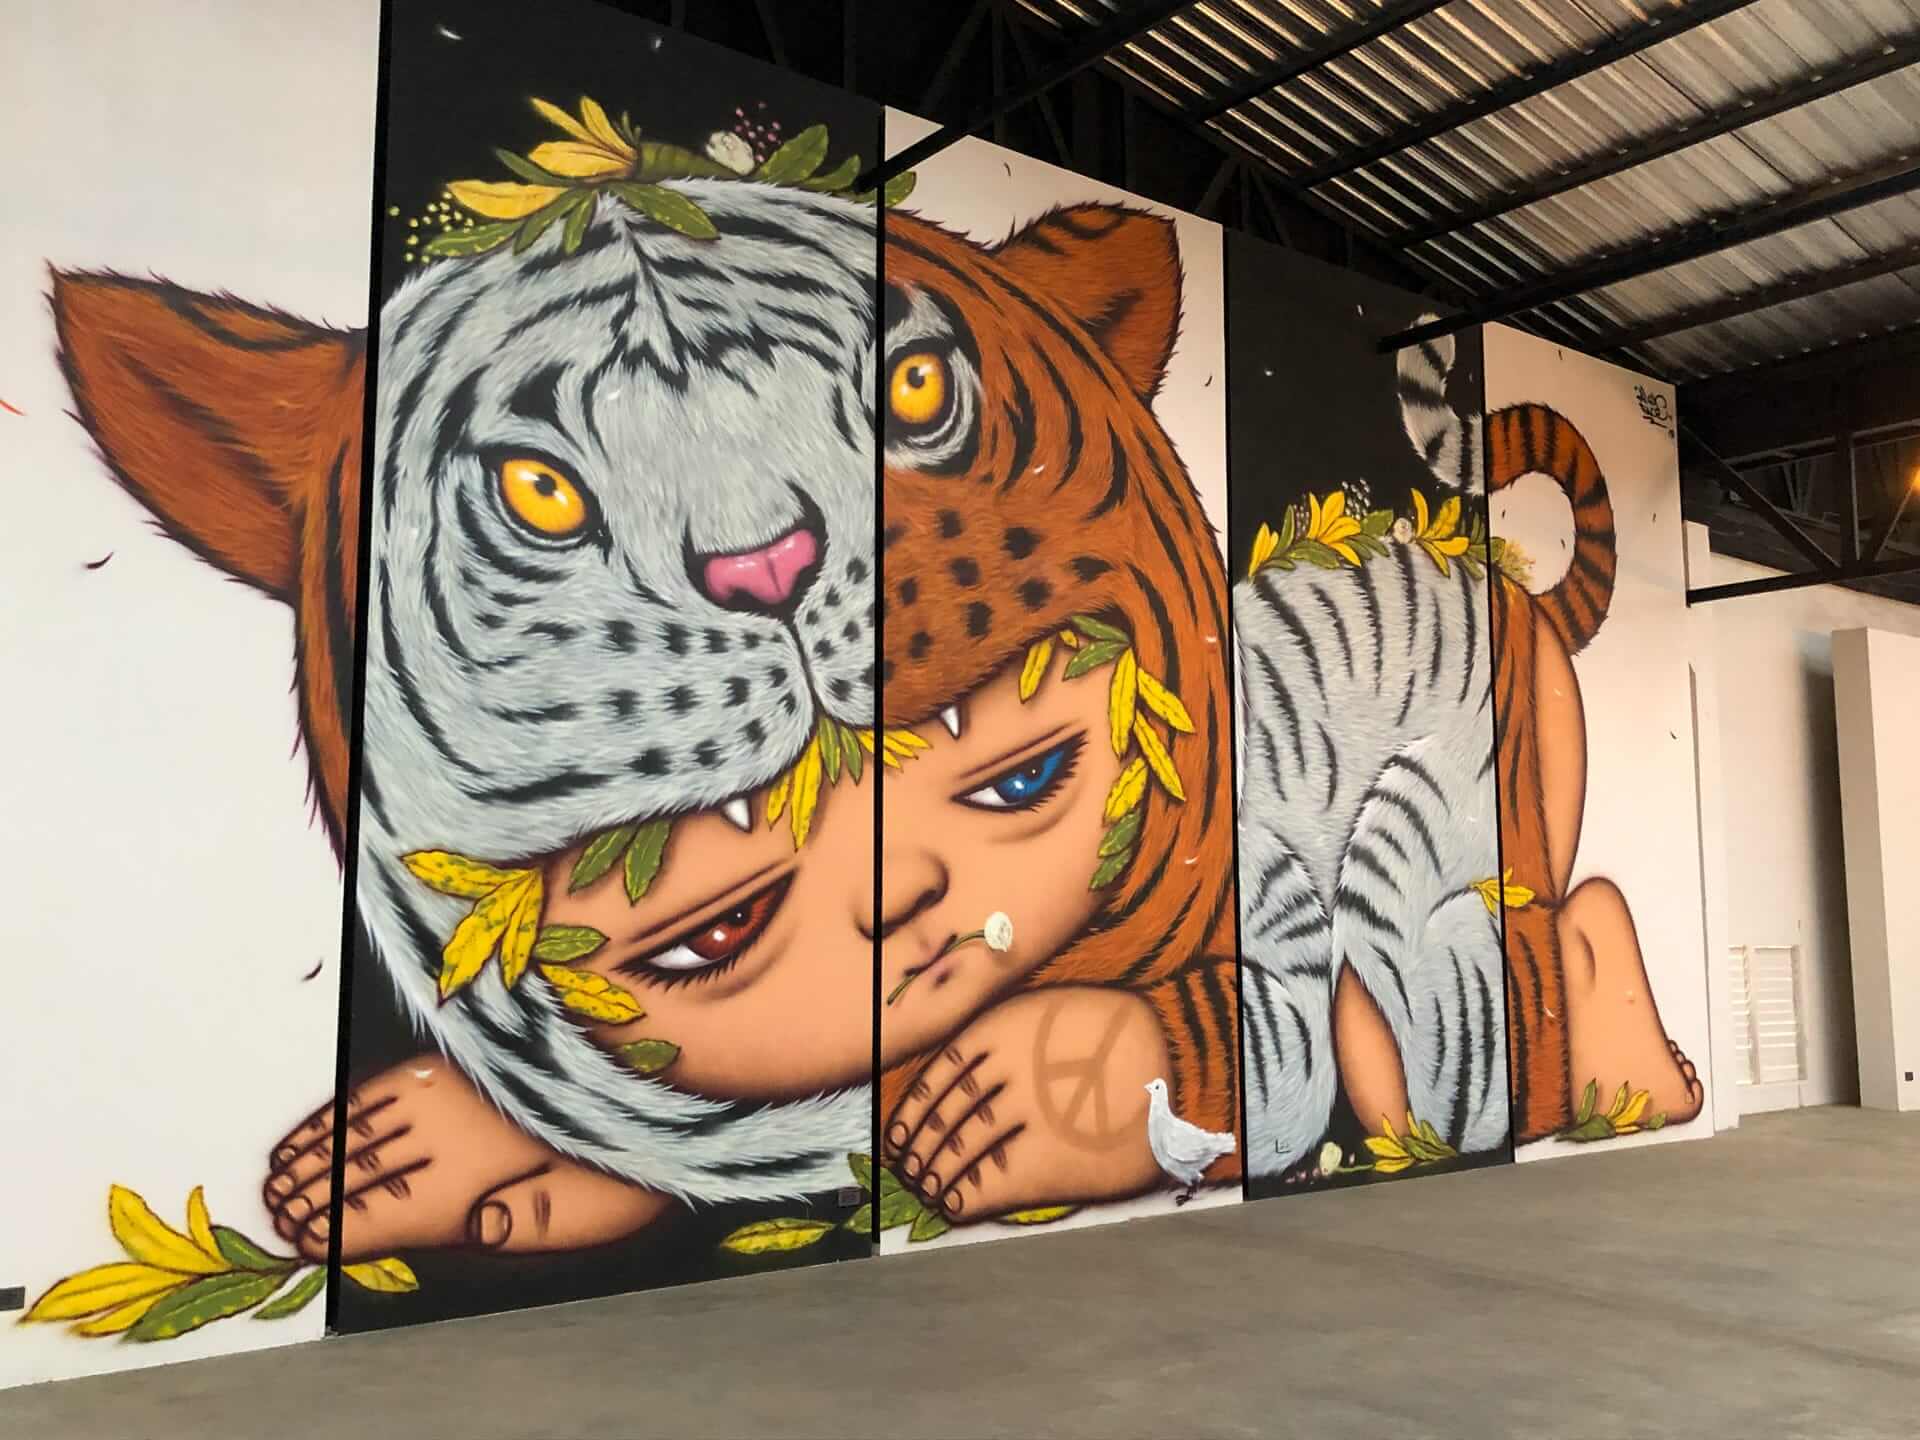 Alex Face Street Art Dream Space Gallery, Chiang Mai, Thailand-21